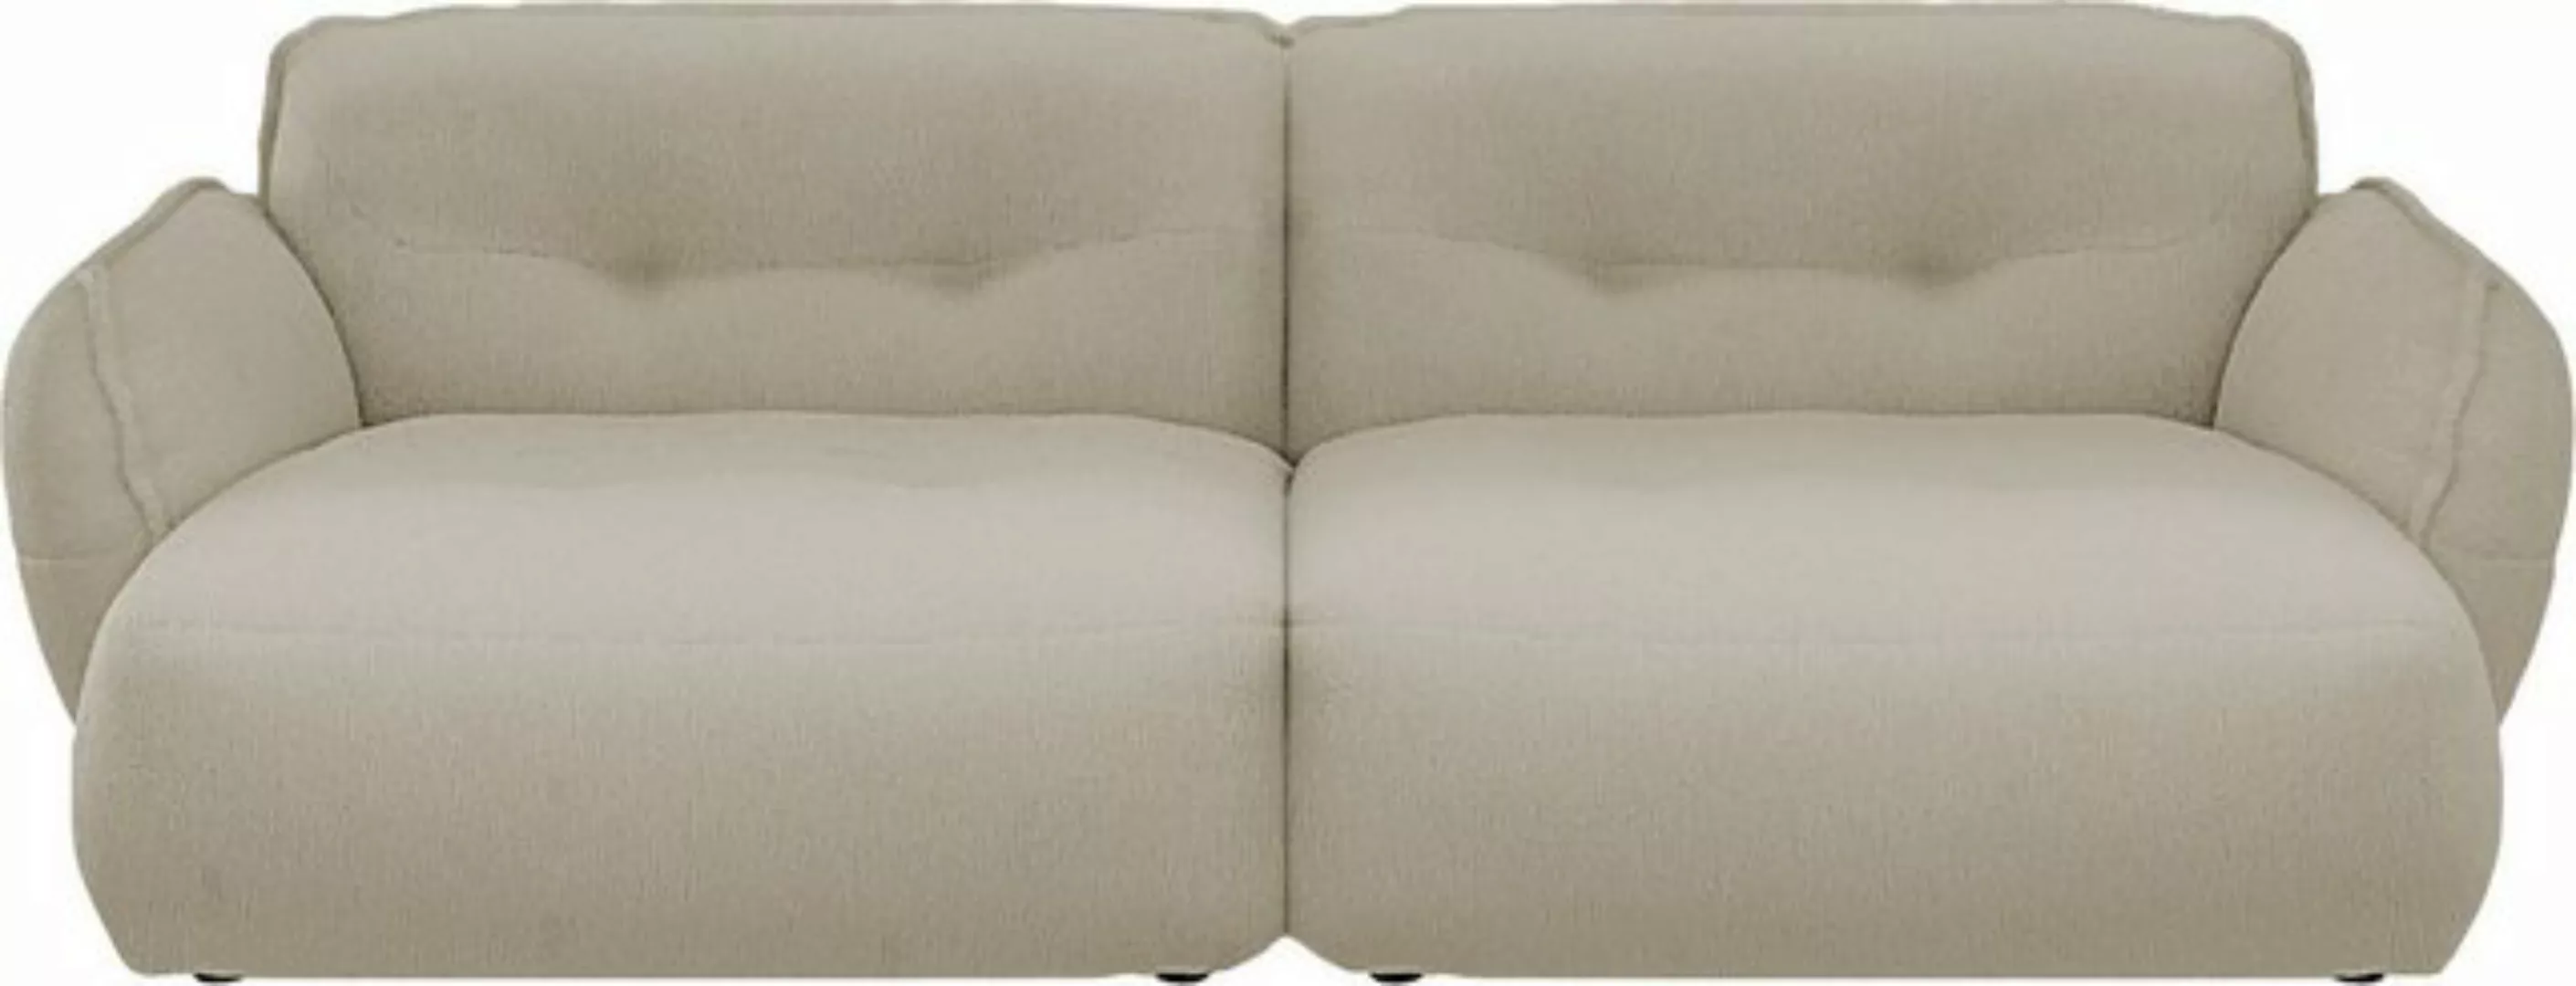 BETYPE Big-Sofa Be Fluffy, Softes Sitzgefühl, moderne Kedernaht, hochwertig günstig online kaufen